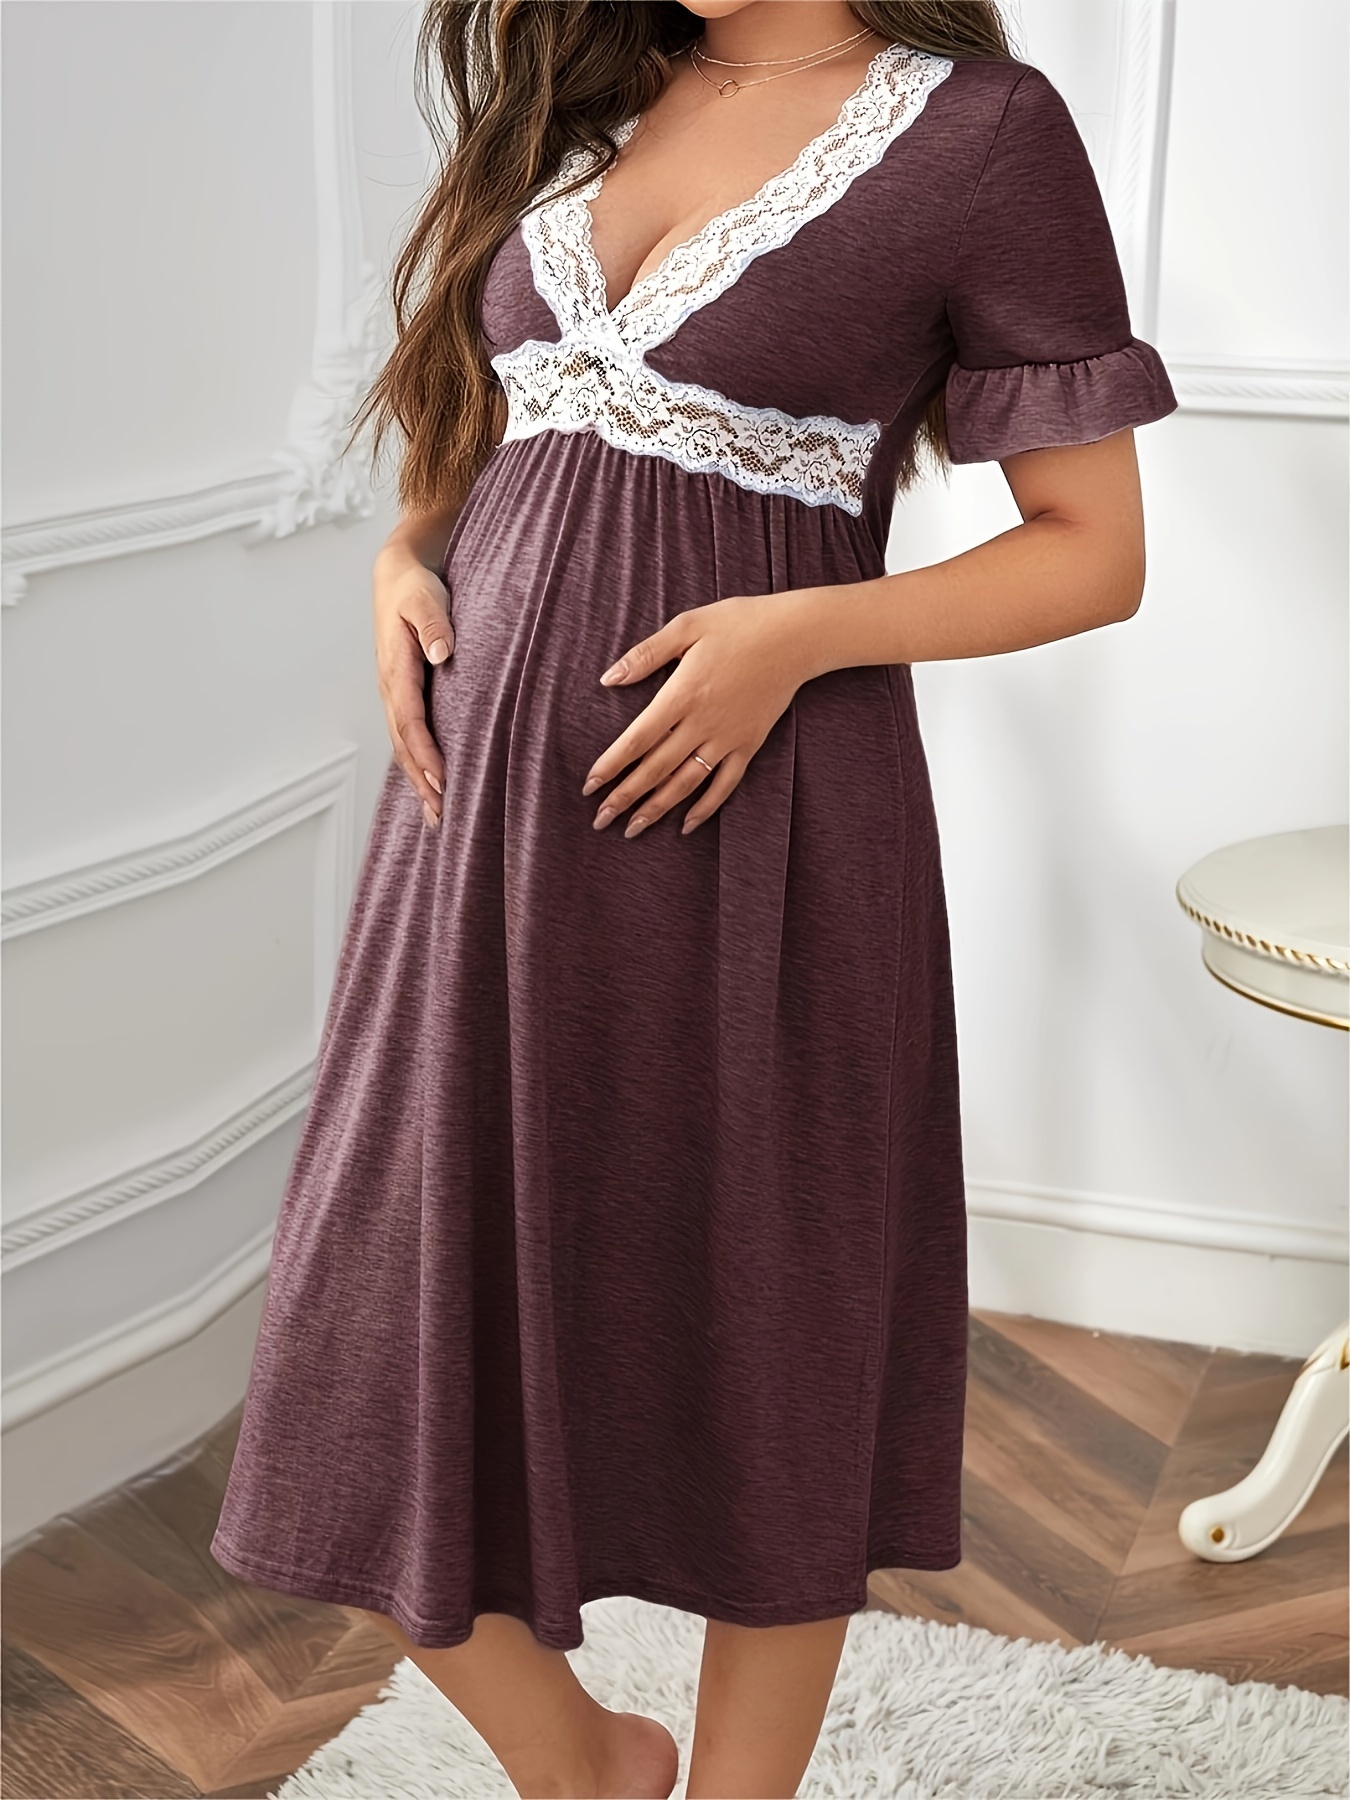 Pregnant Women's Sexy Maternity Sheer Mesh Lace Nightdress & Thong  Underwear Set